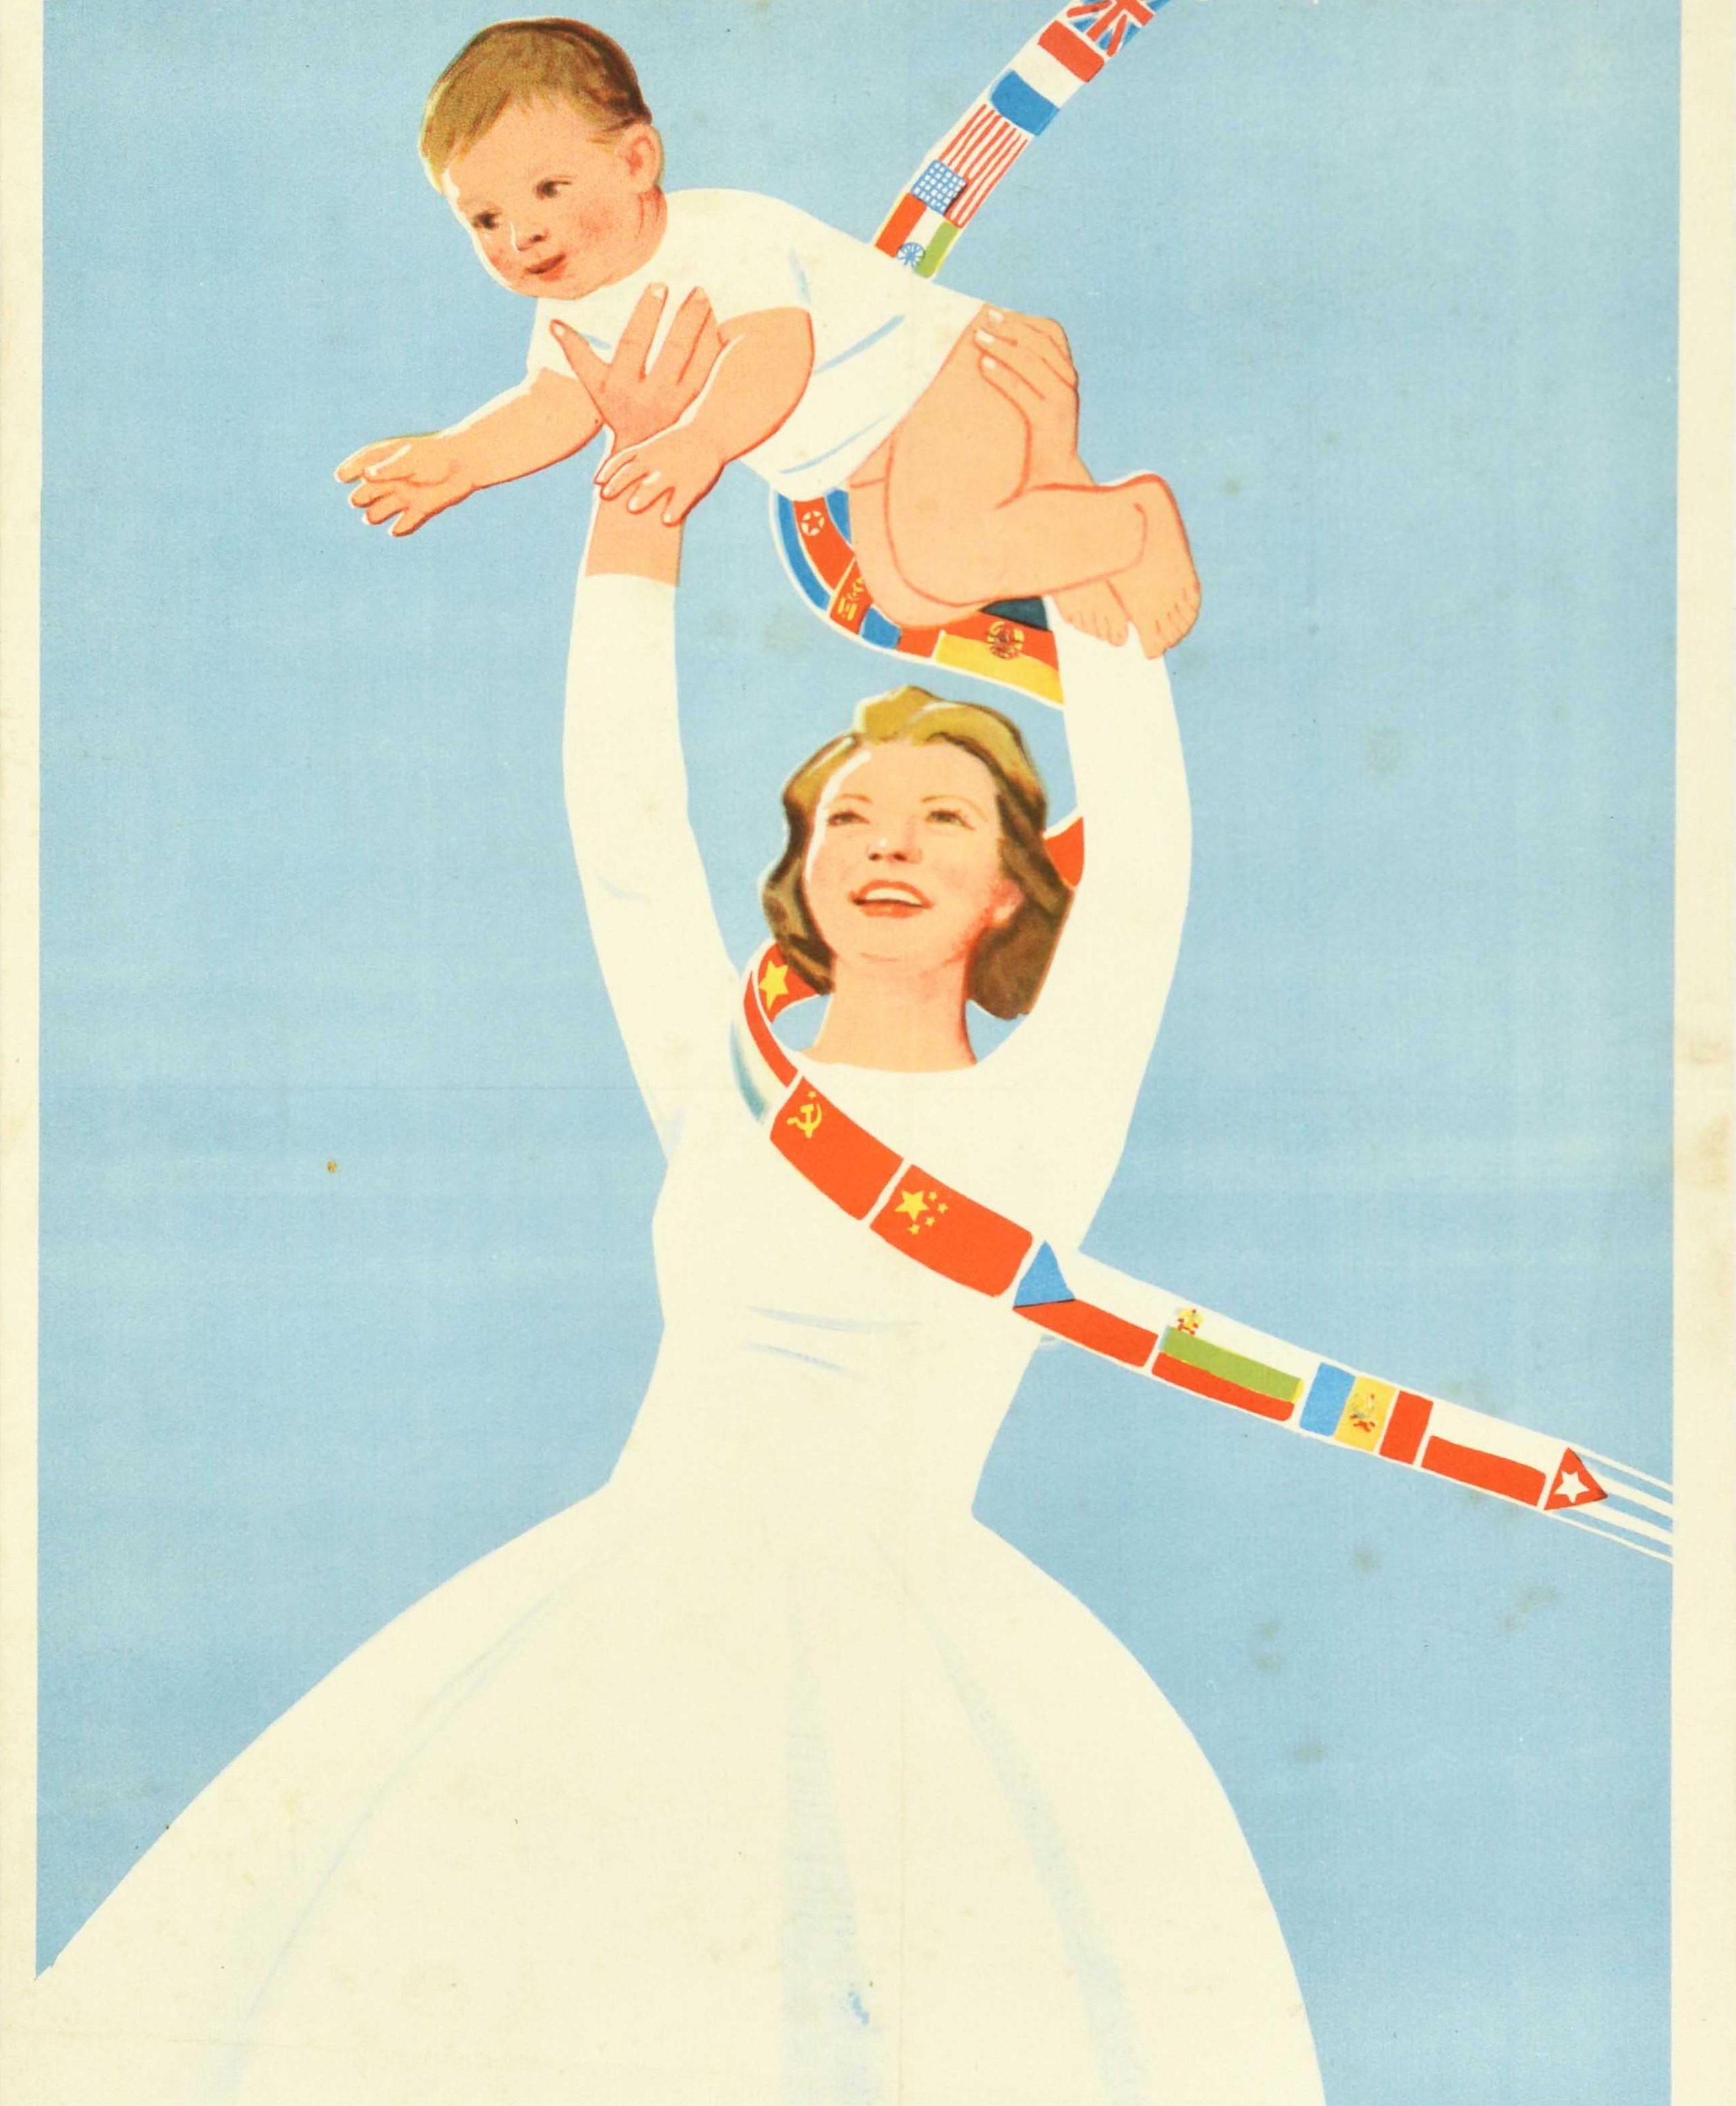 international children's day poster